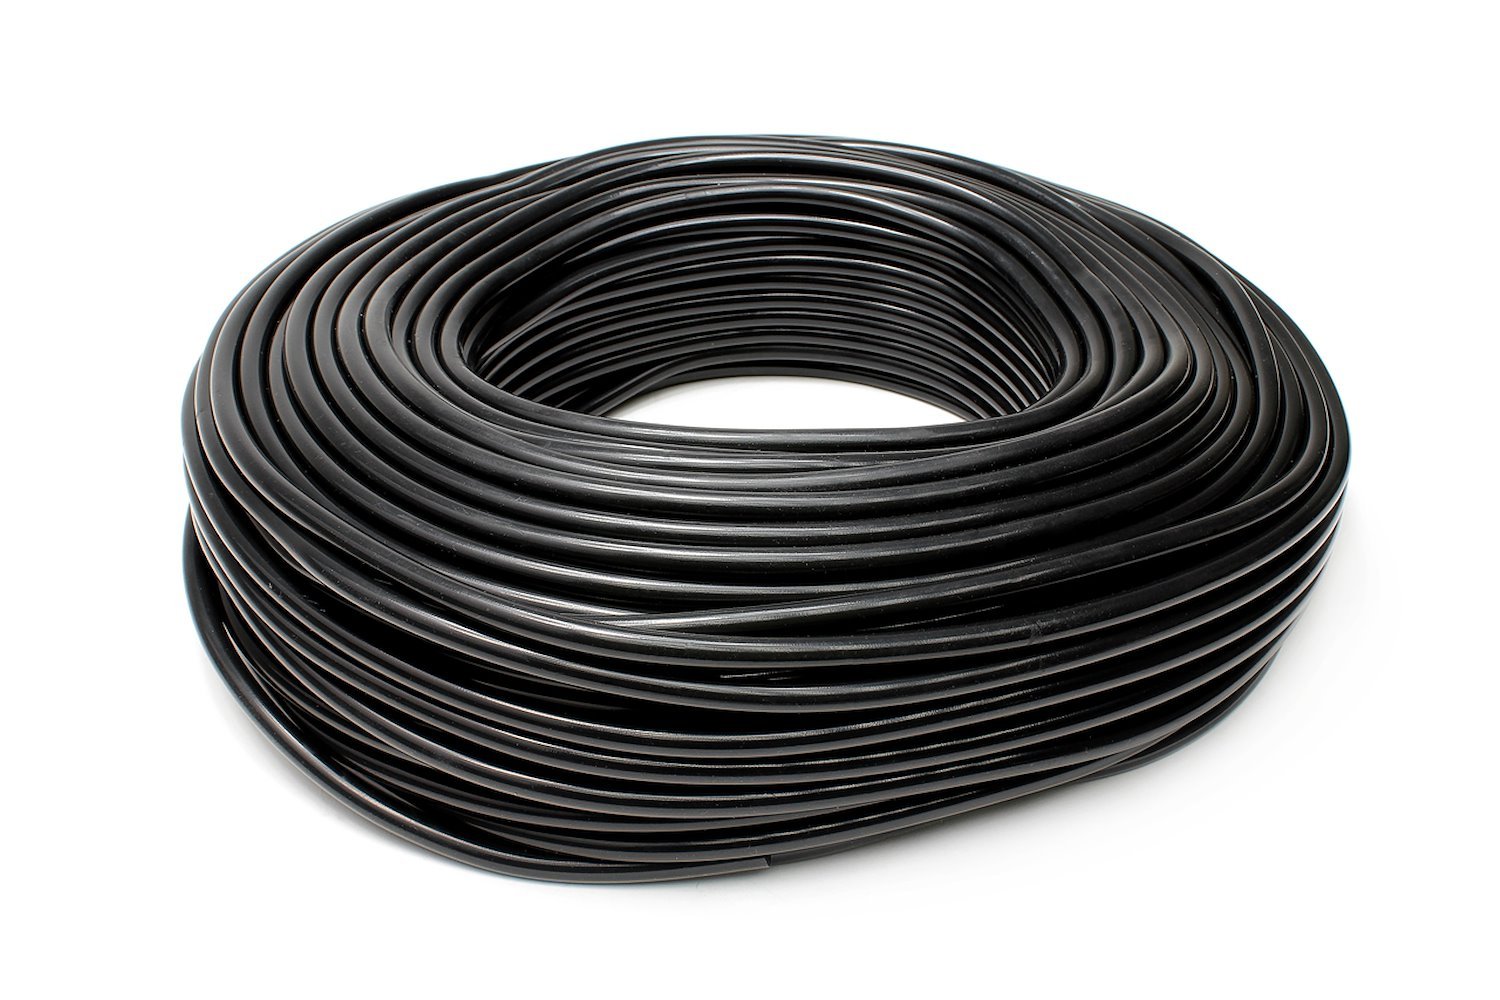 HTSVH95-BLKx100 High-Temperature Silicone Vacuum Hose Tubing, 3/8 in. ID, 100 ft. Roll, Black